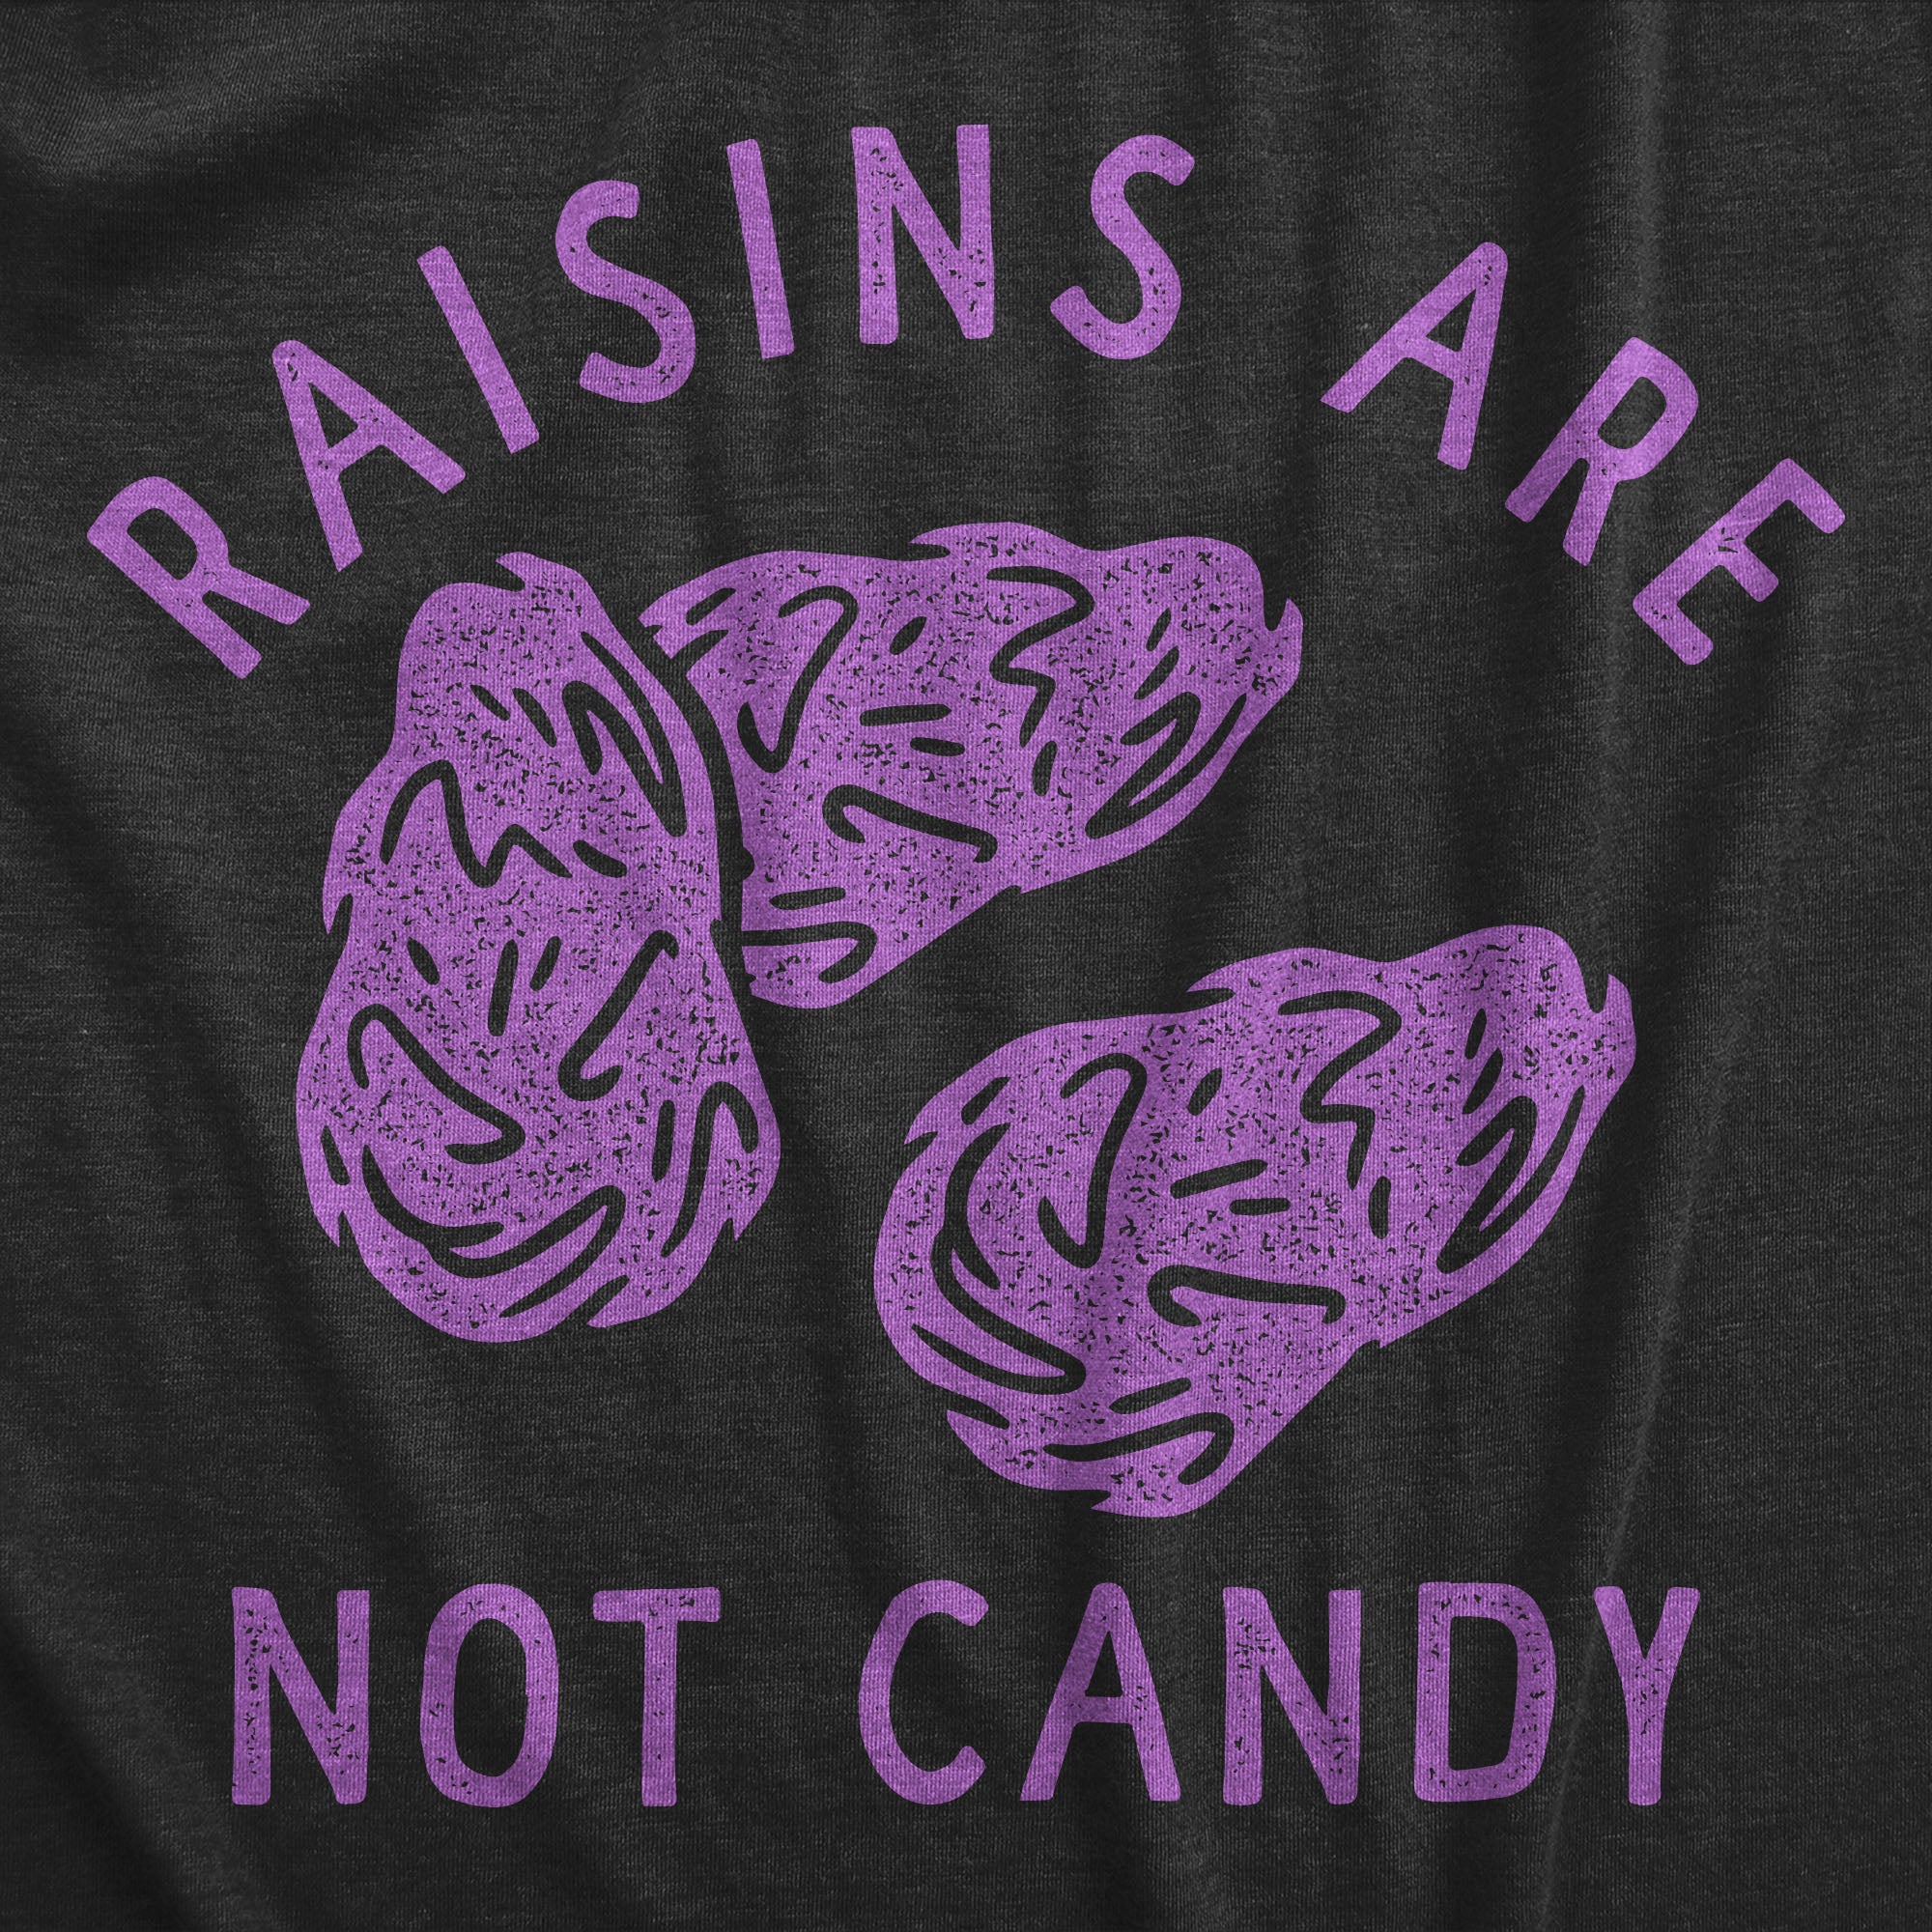 Funny Heather Black - RAISINS Raisins Are Not Candy Youth T Shirt Nerdy Food Tee